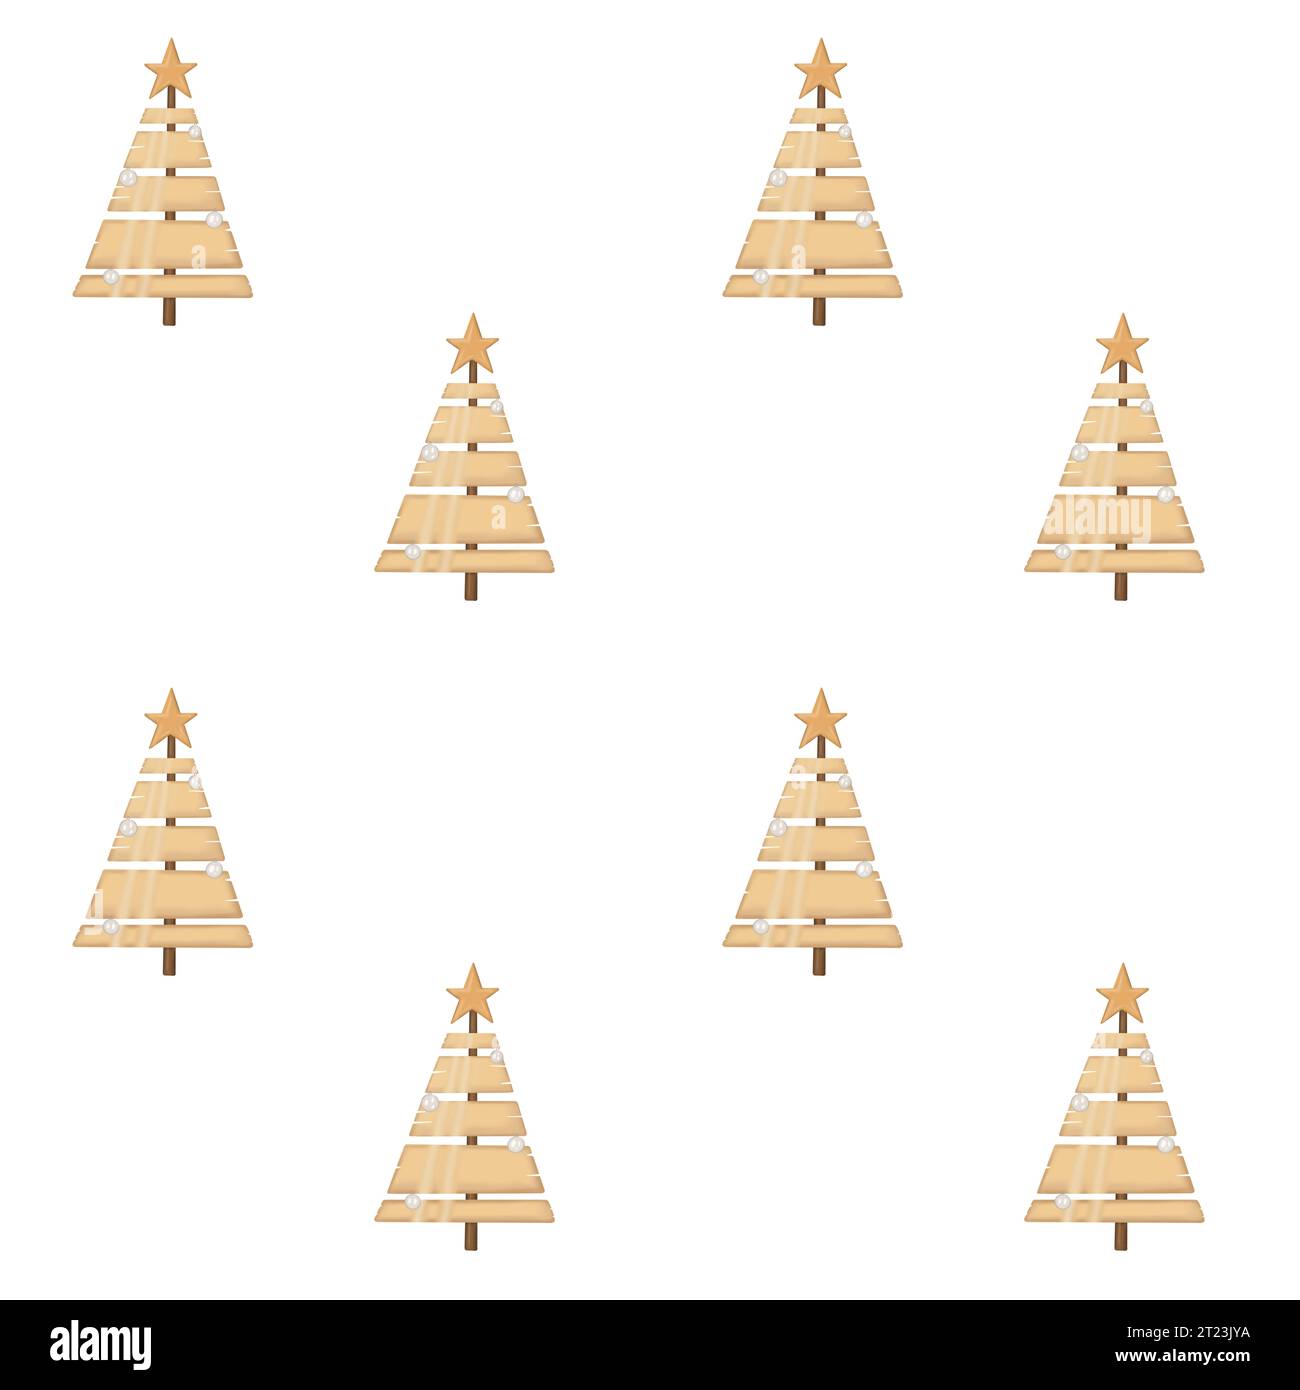 Seamless pattern with Christmas tree Stock Photo